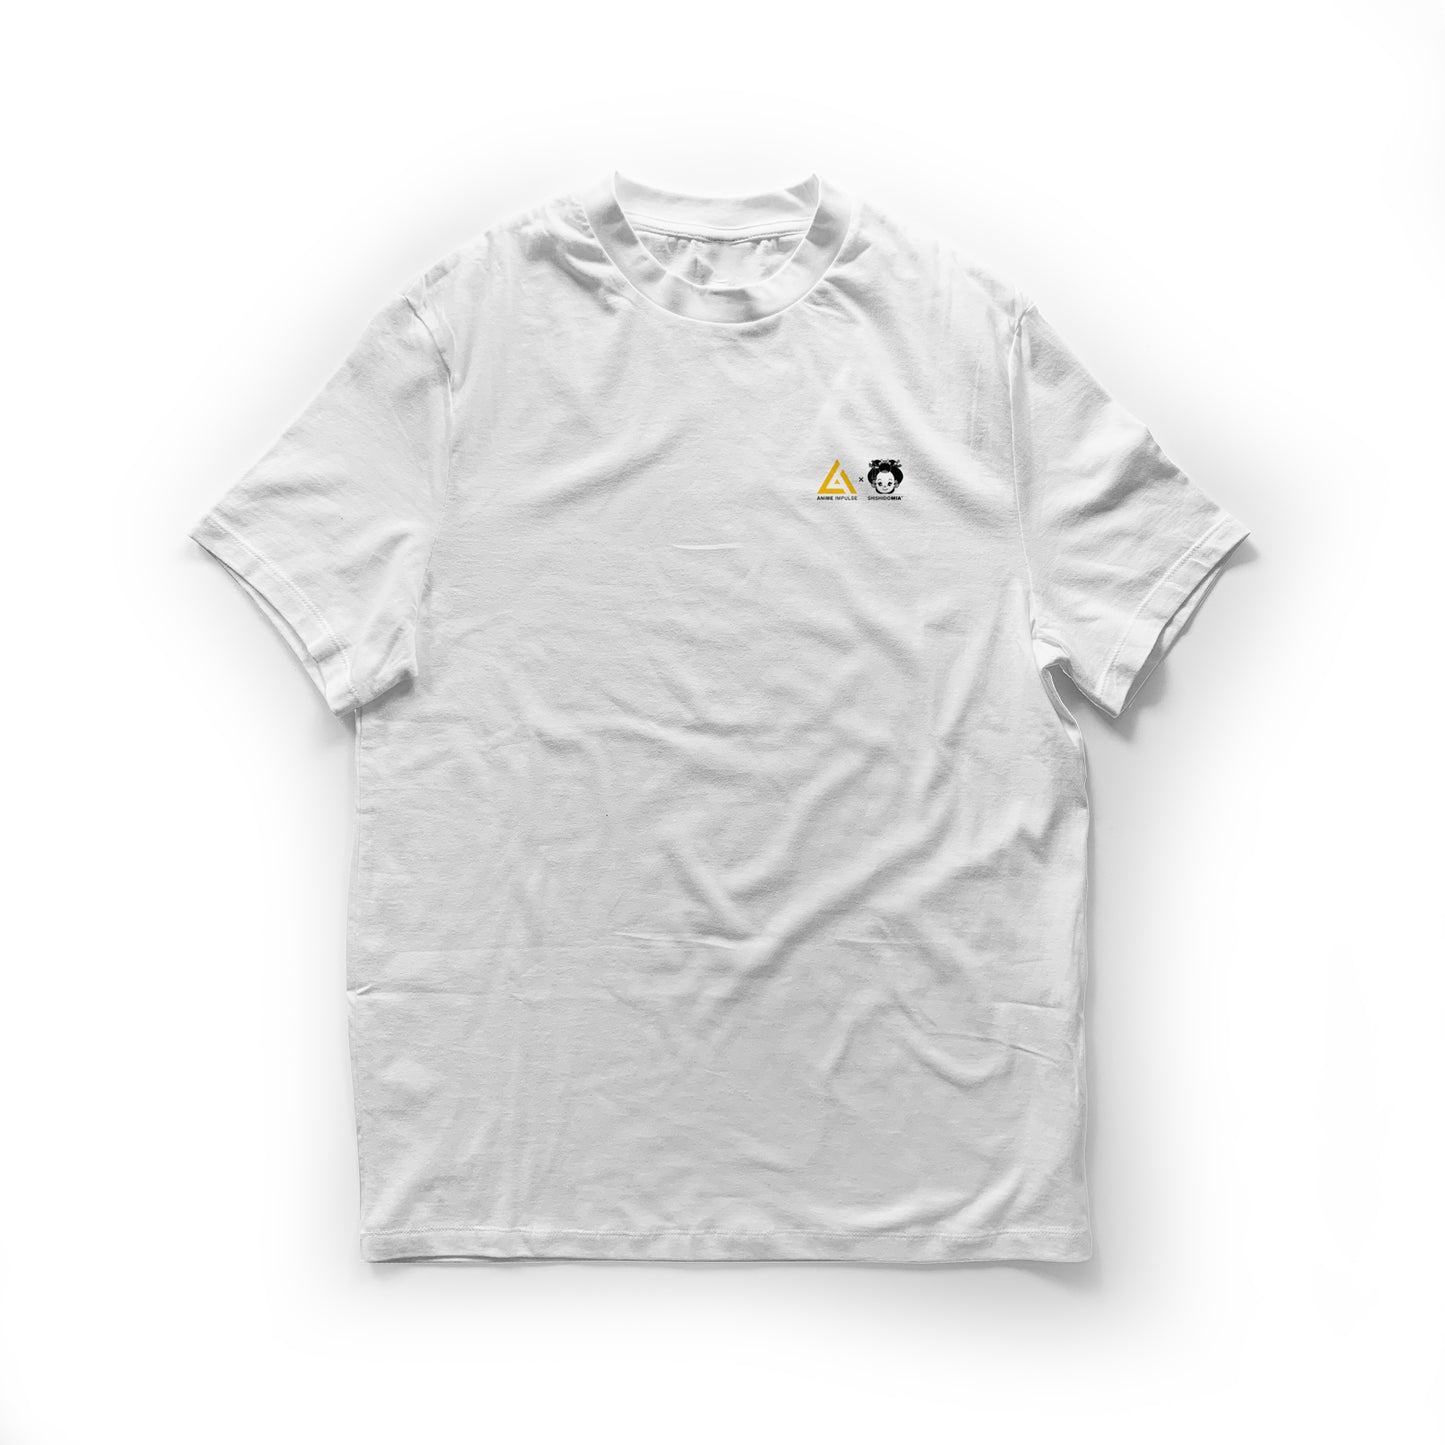 ANIME Impulse X Shishidomia ‘Mia The Collector’ T-Shirt